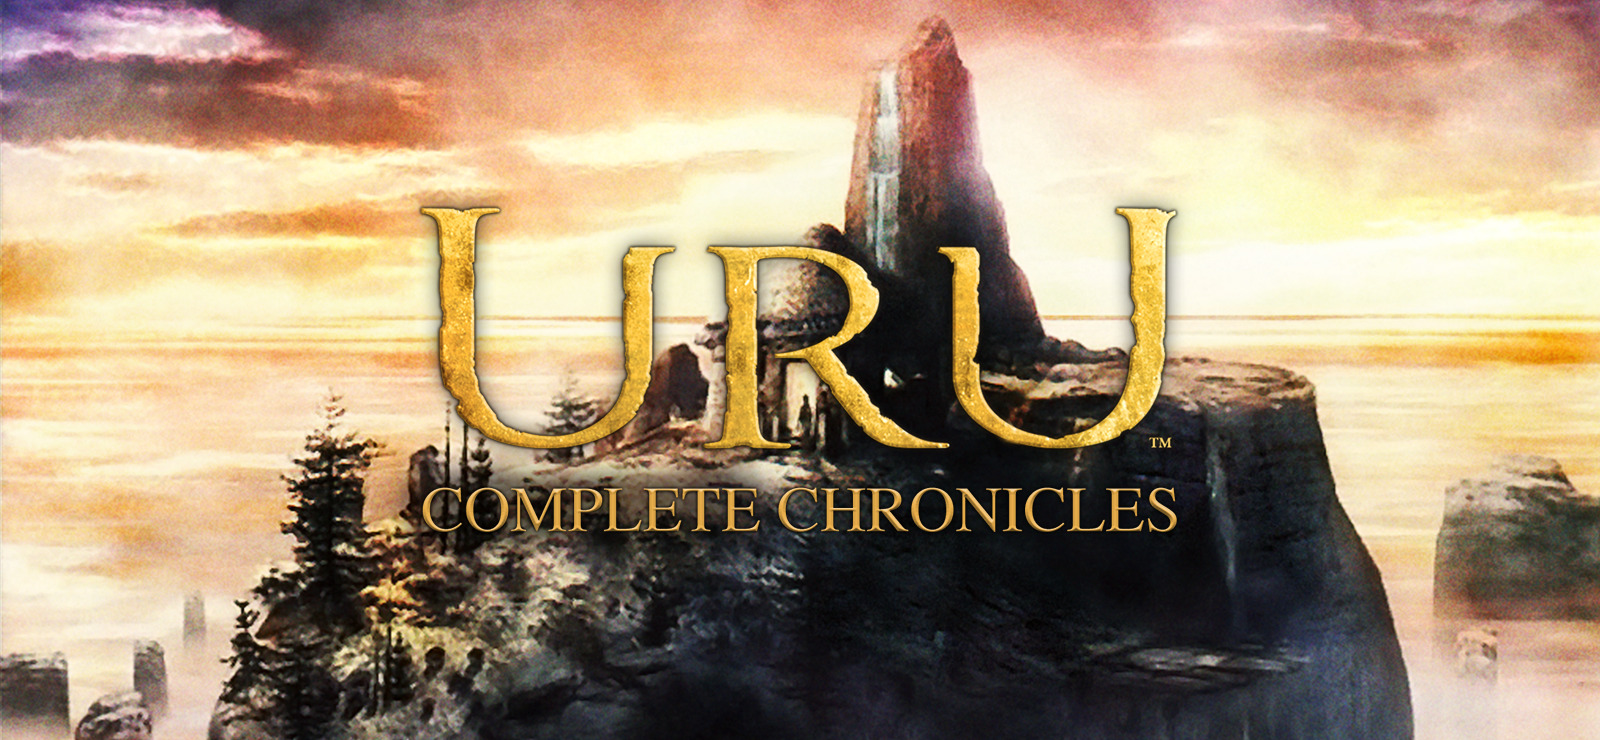 Uru: Complete Chronicles